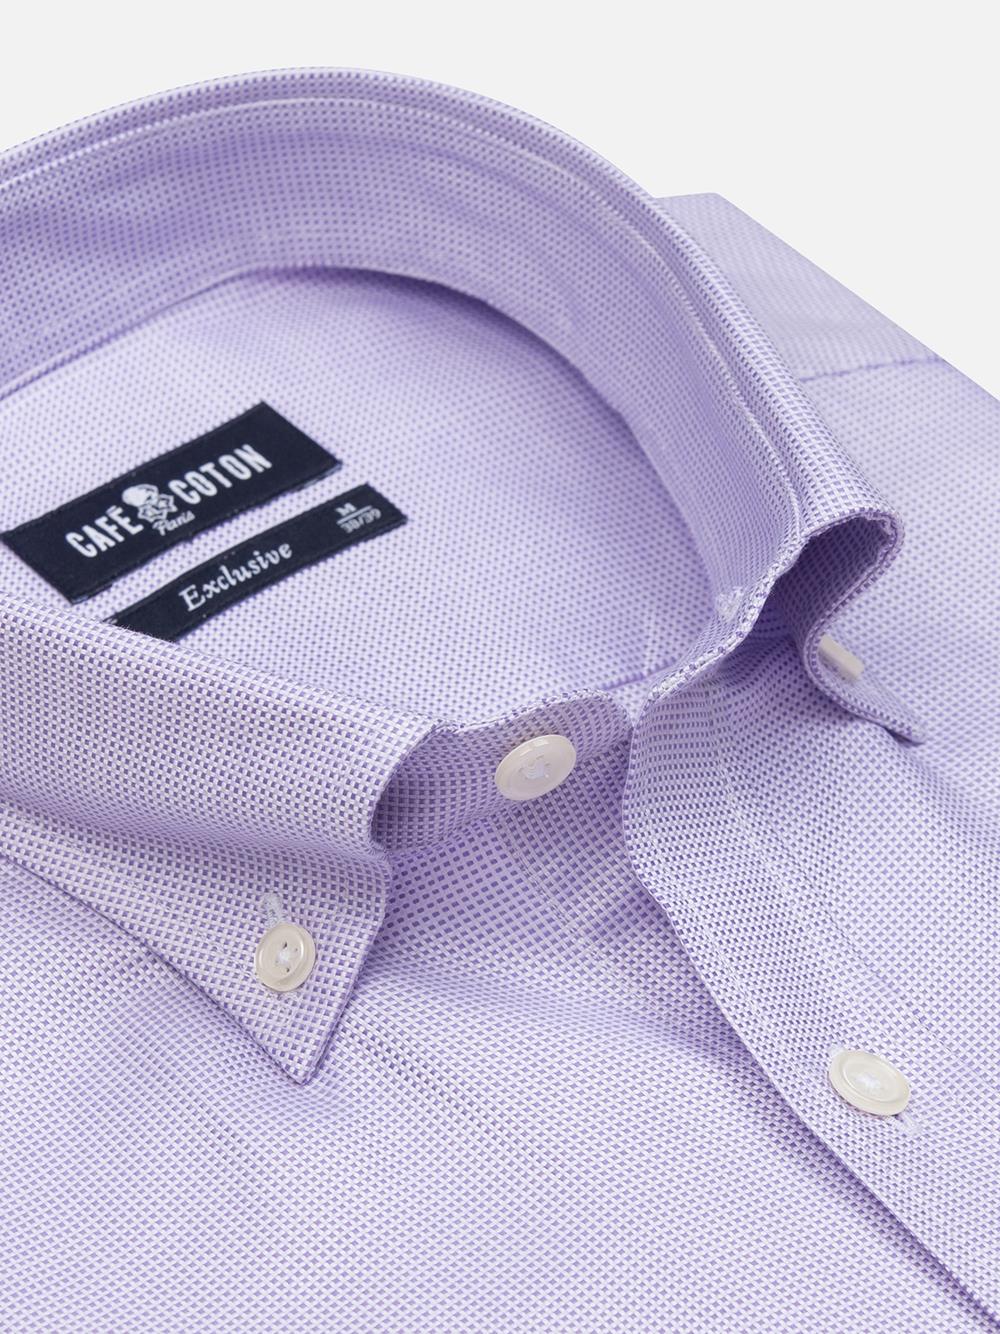 Parma slim fit shirt - Button down collar